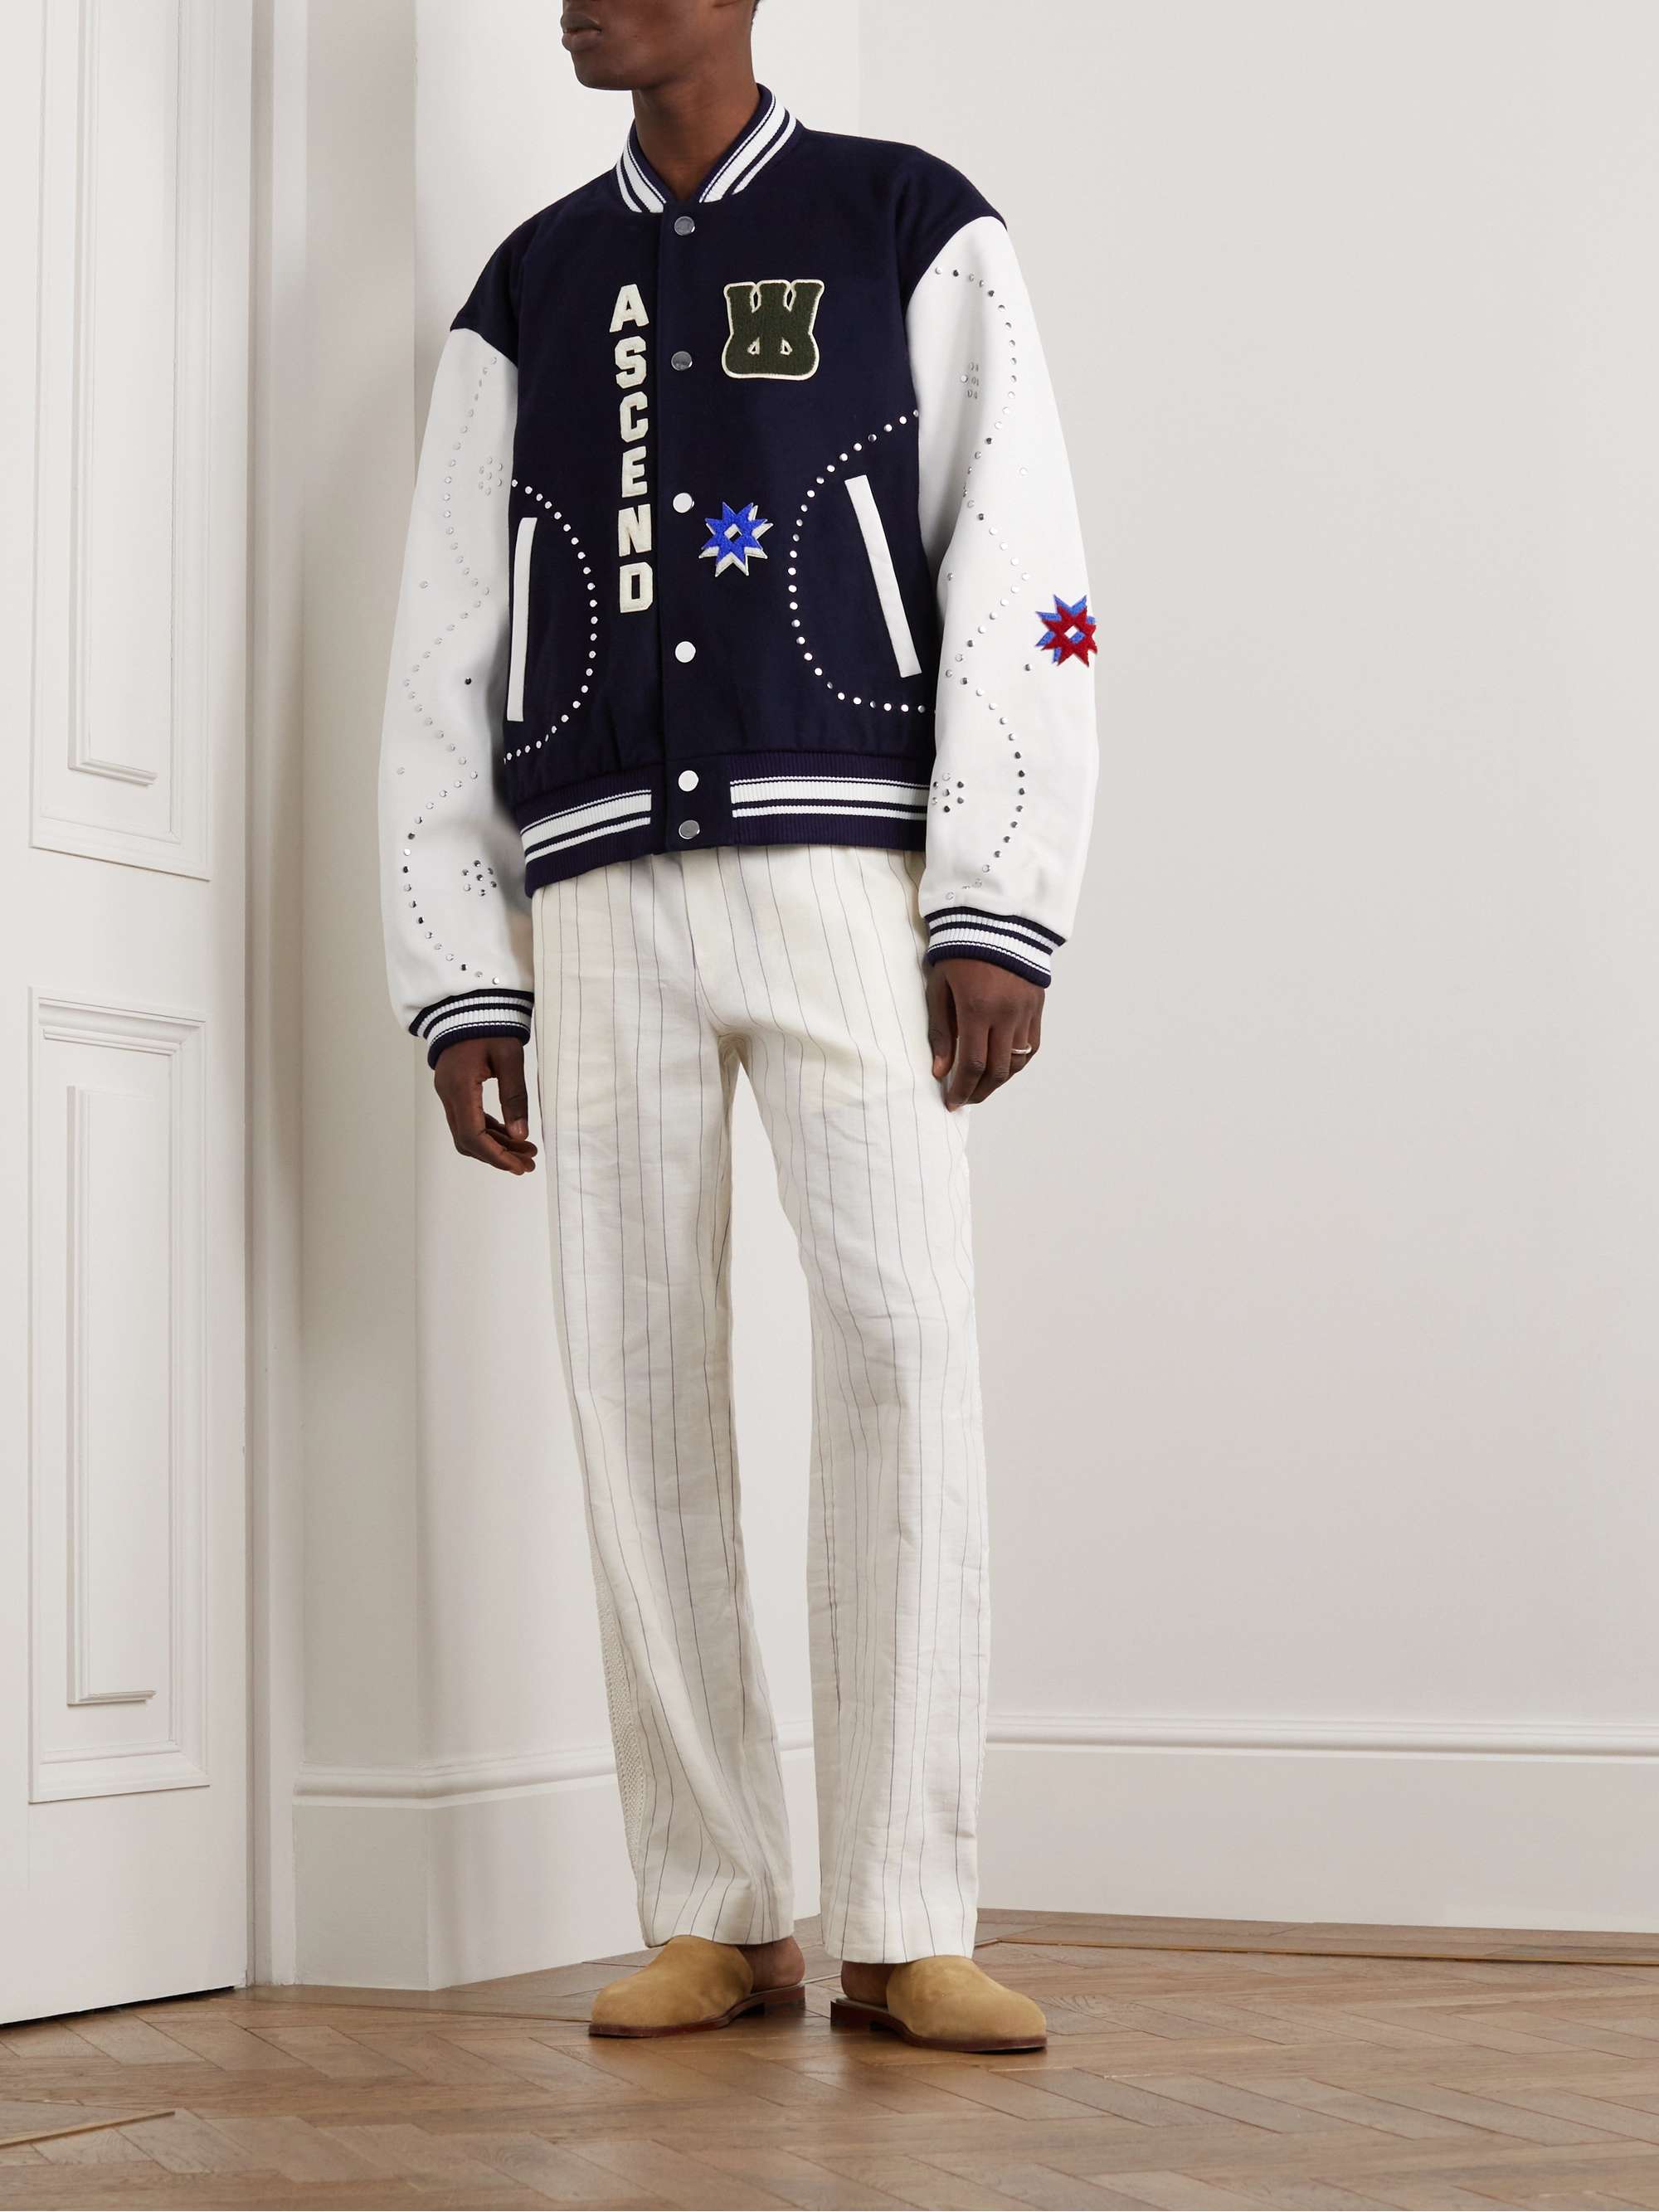 WALES BONNER Appliquéd Studded Wool-Blend and Leather Varsity Jacket